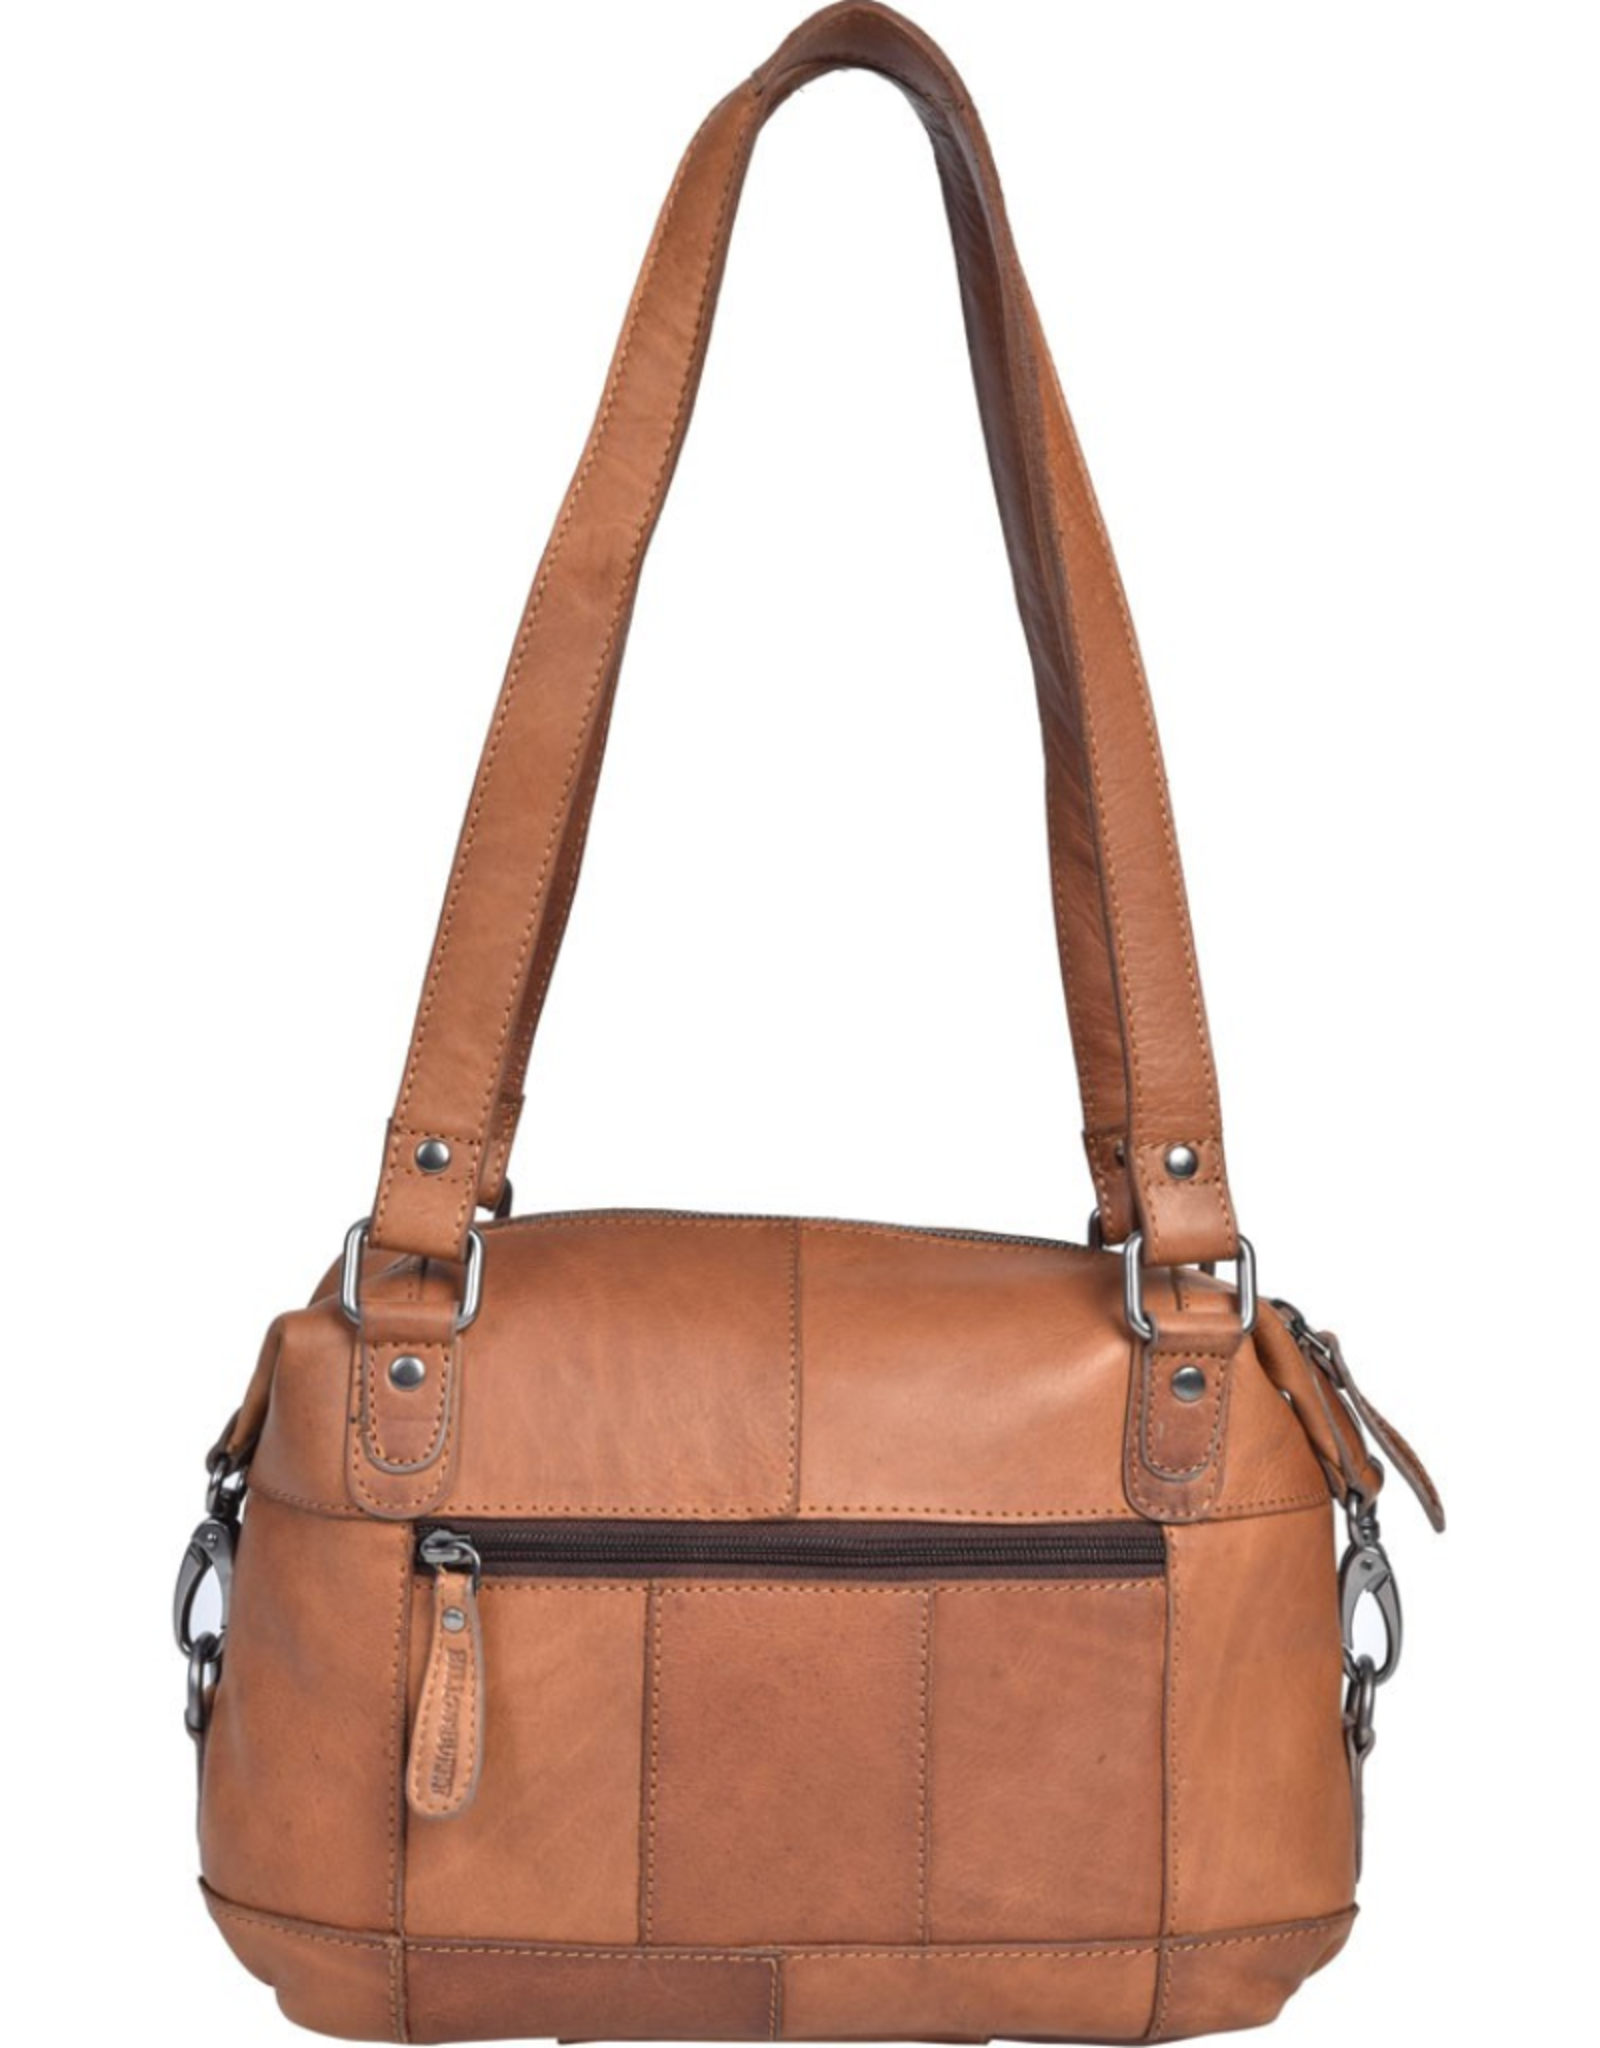 HillBurry Leather bags - HillBurry leather shoulder bag Weekend bag